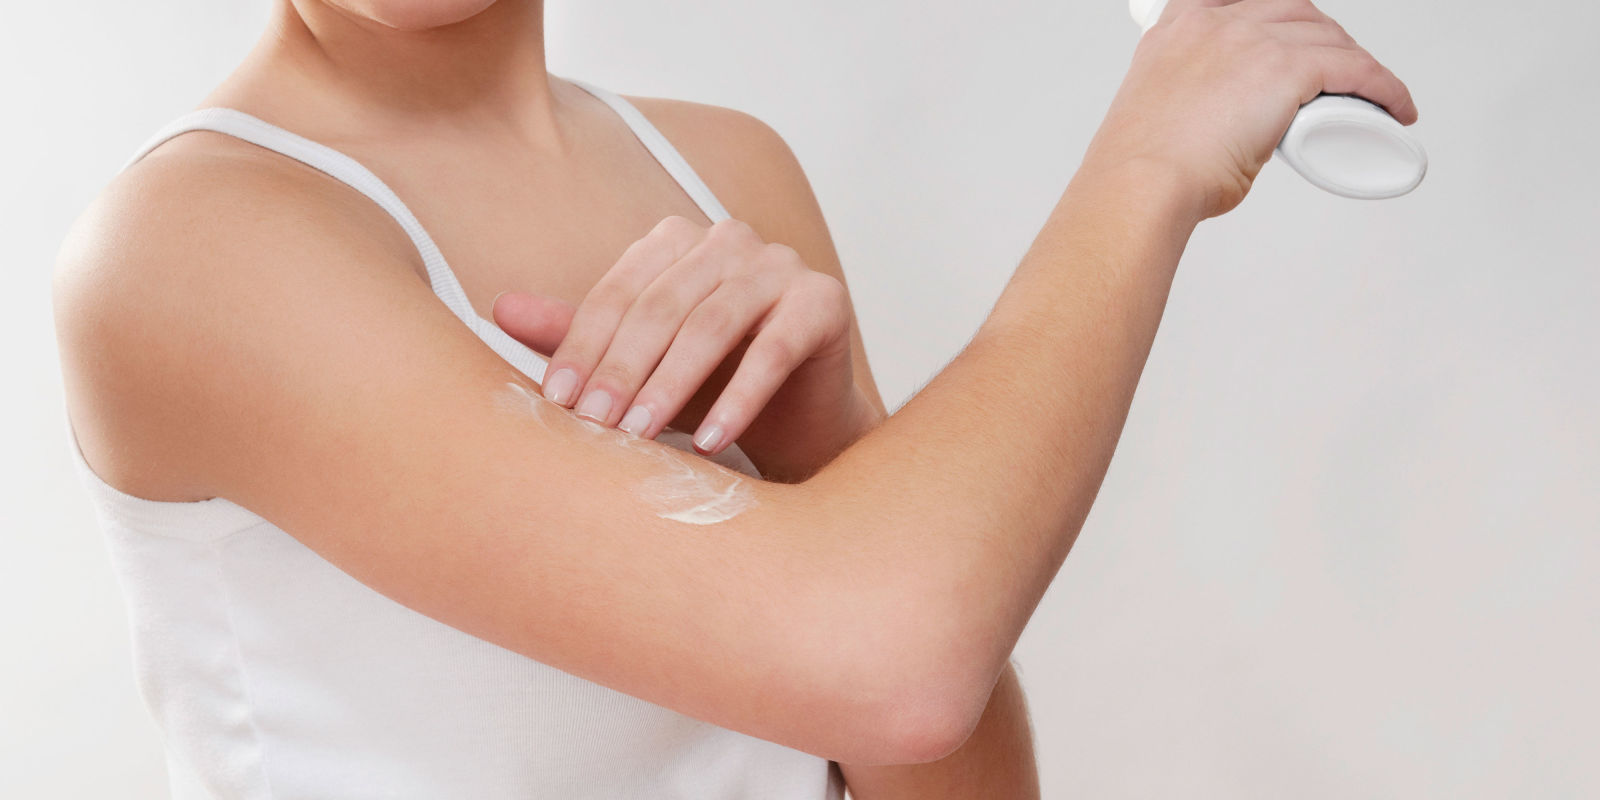 Is whitening body lotion harmful?